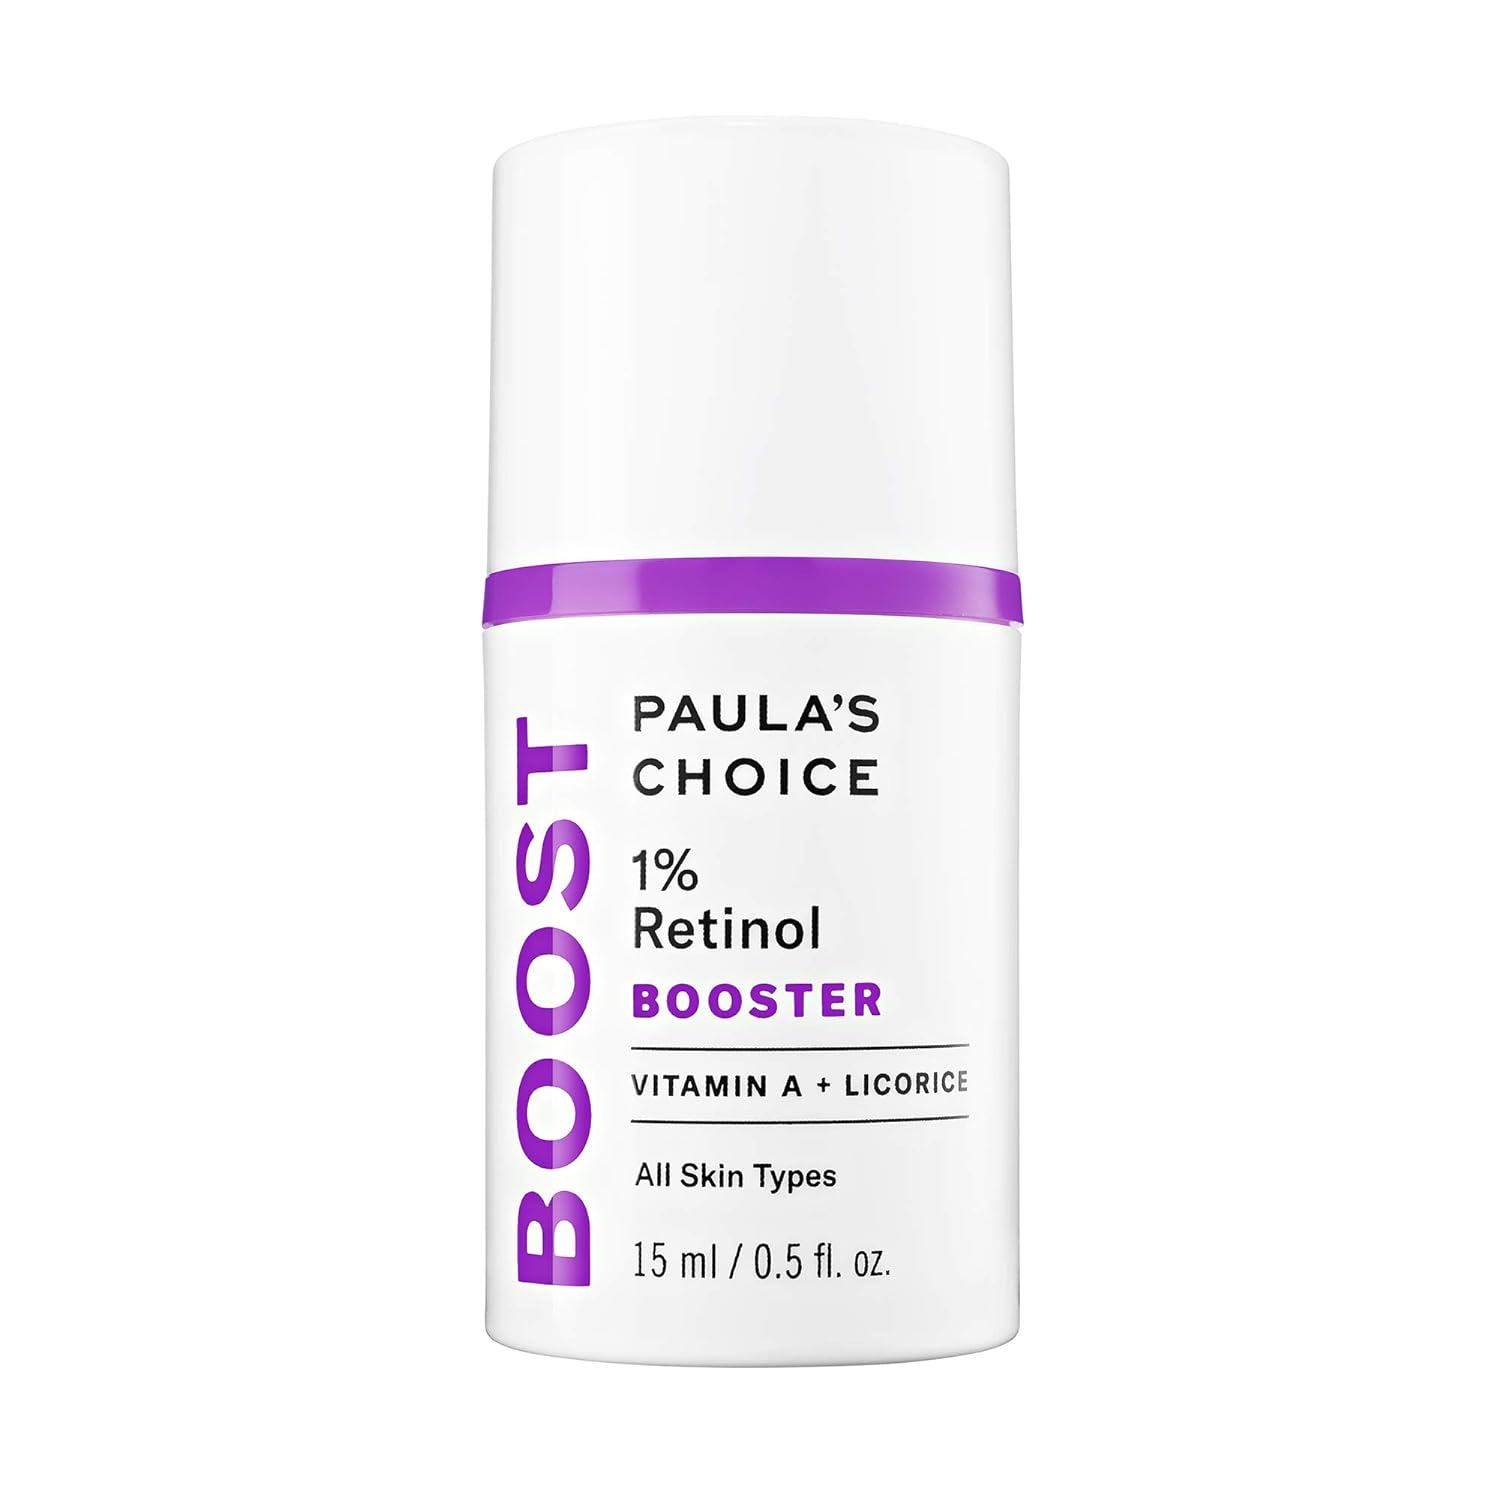 paula's choice retinol